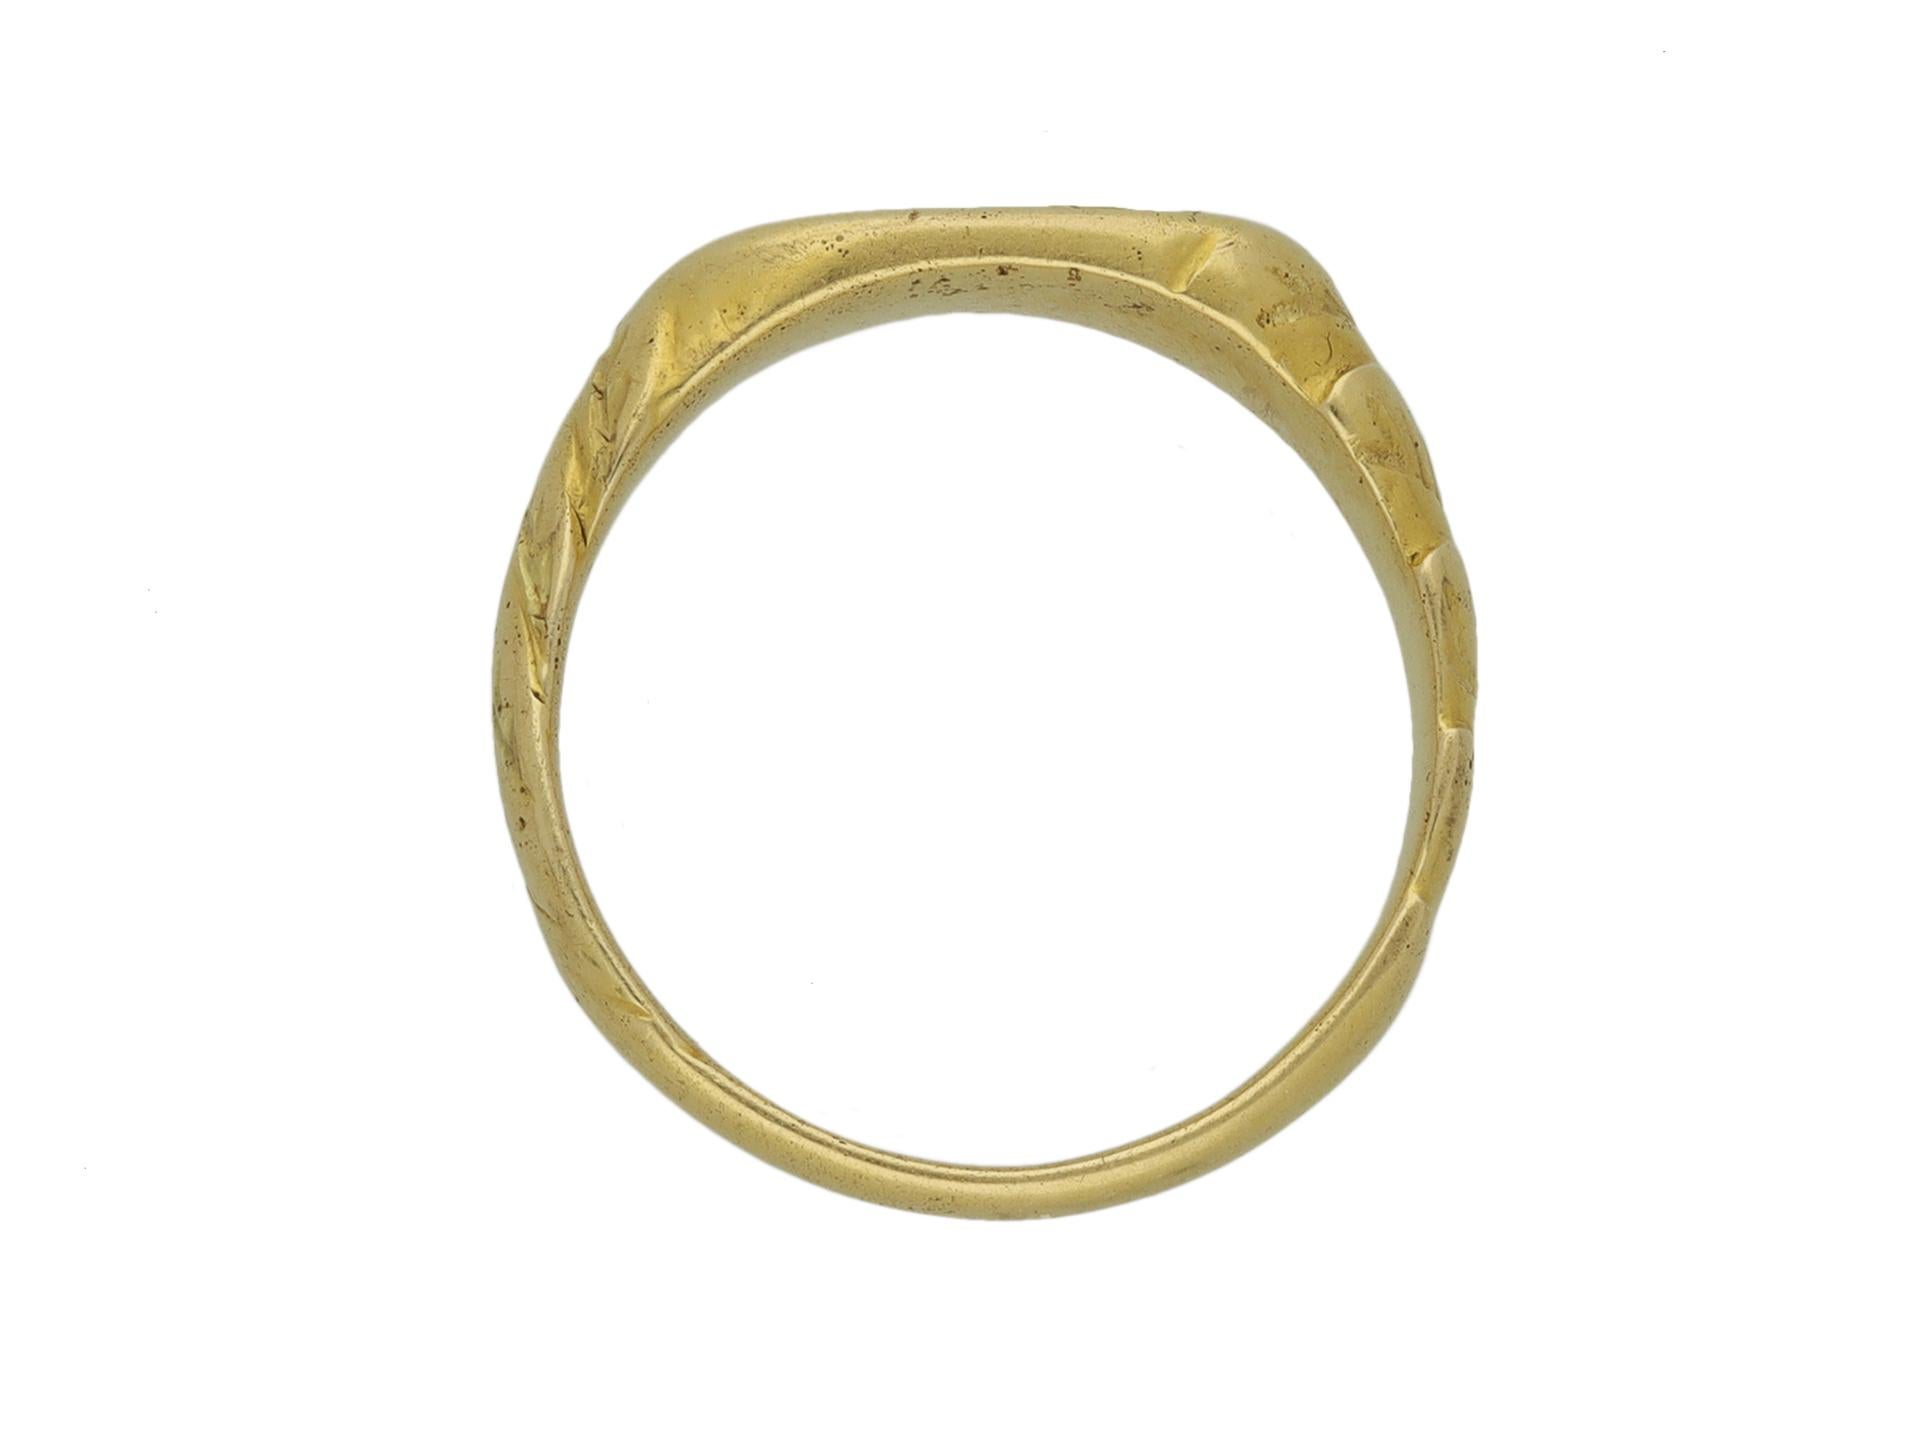 medieval rings history